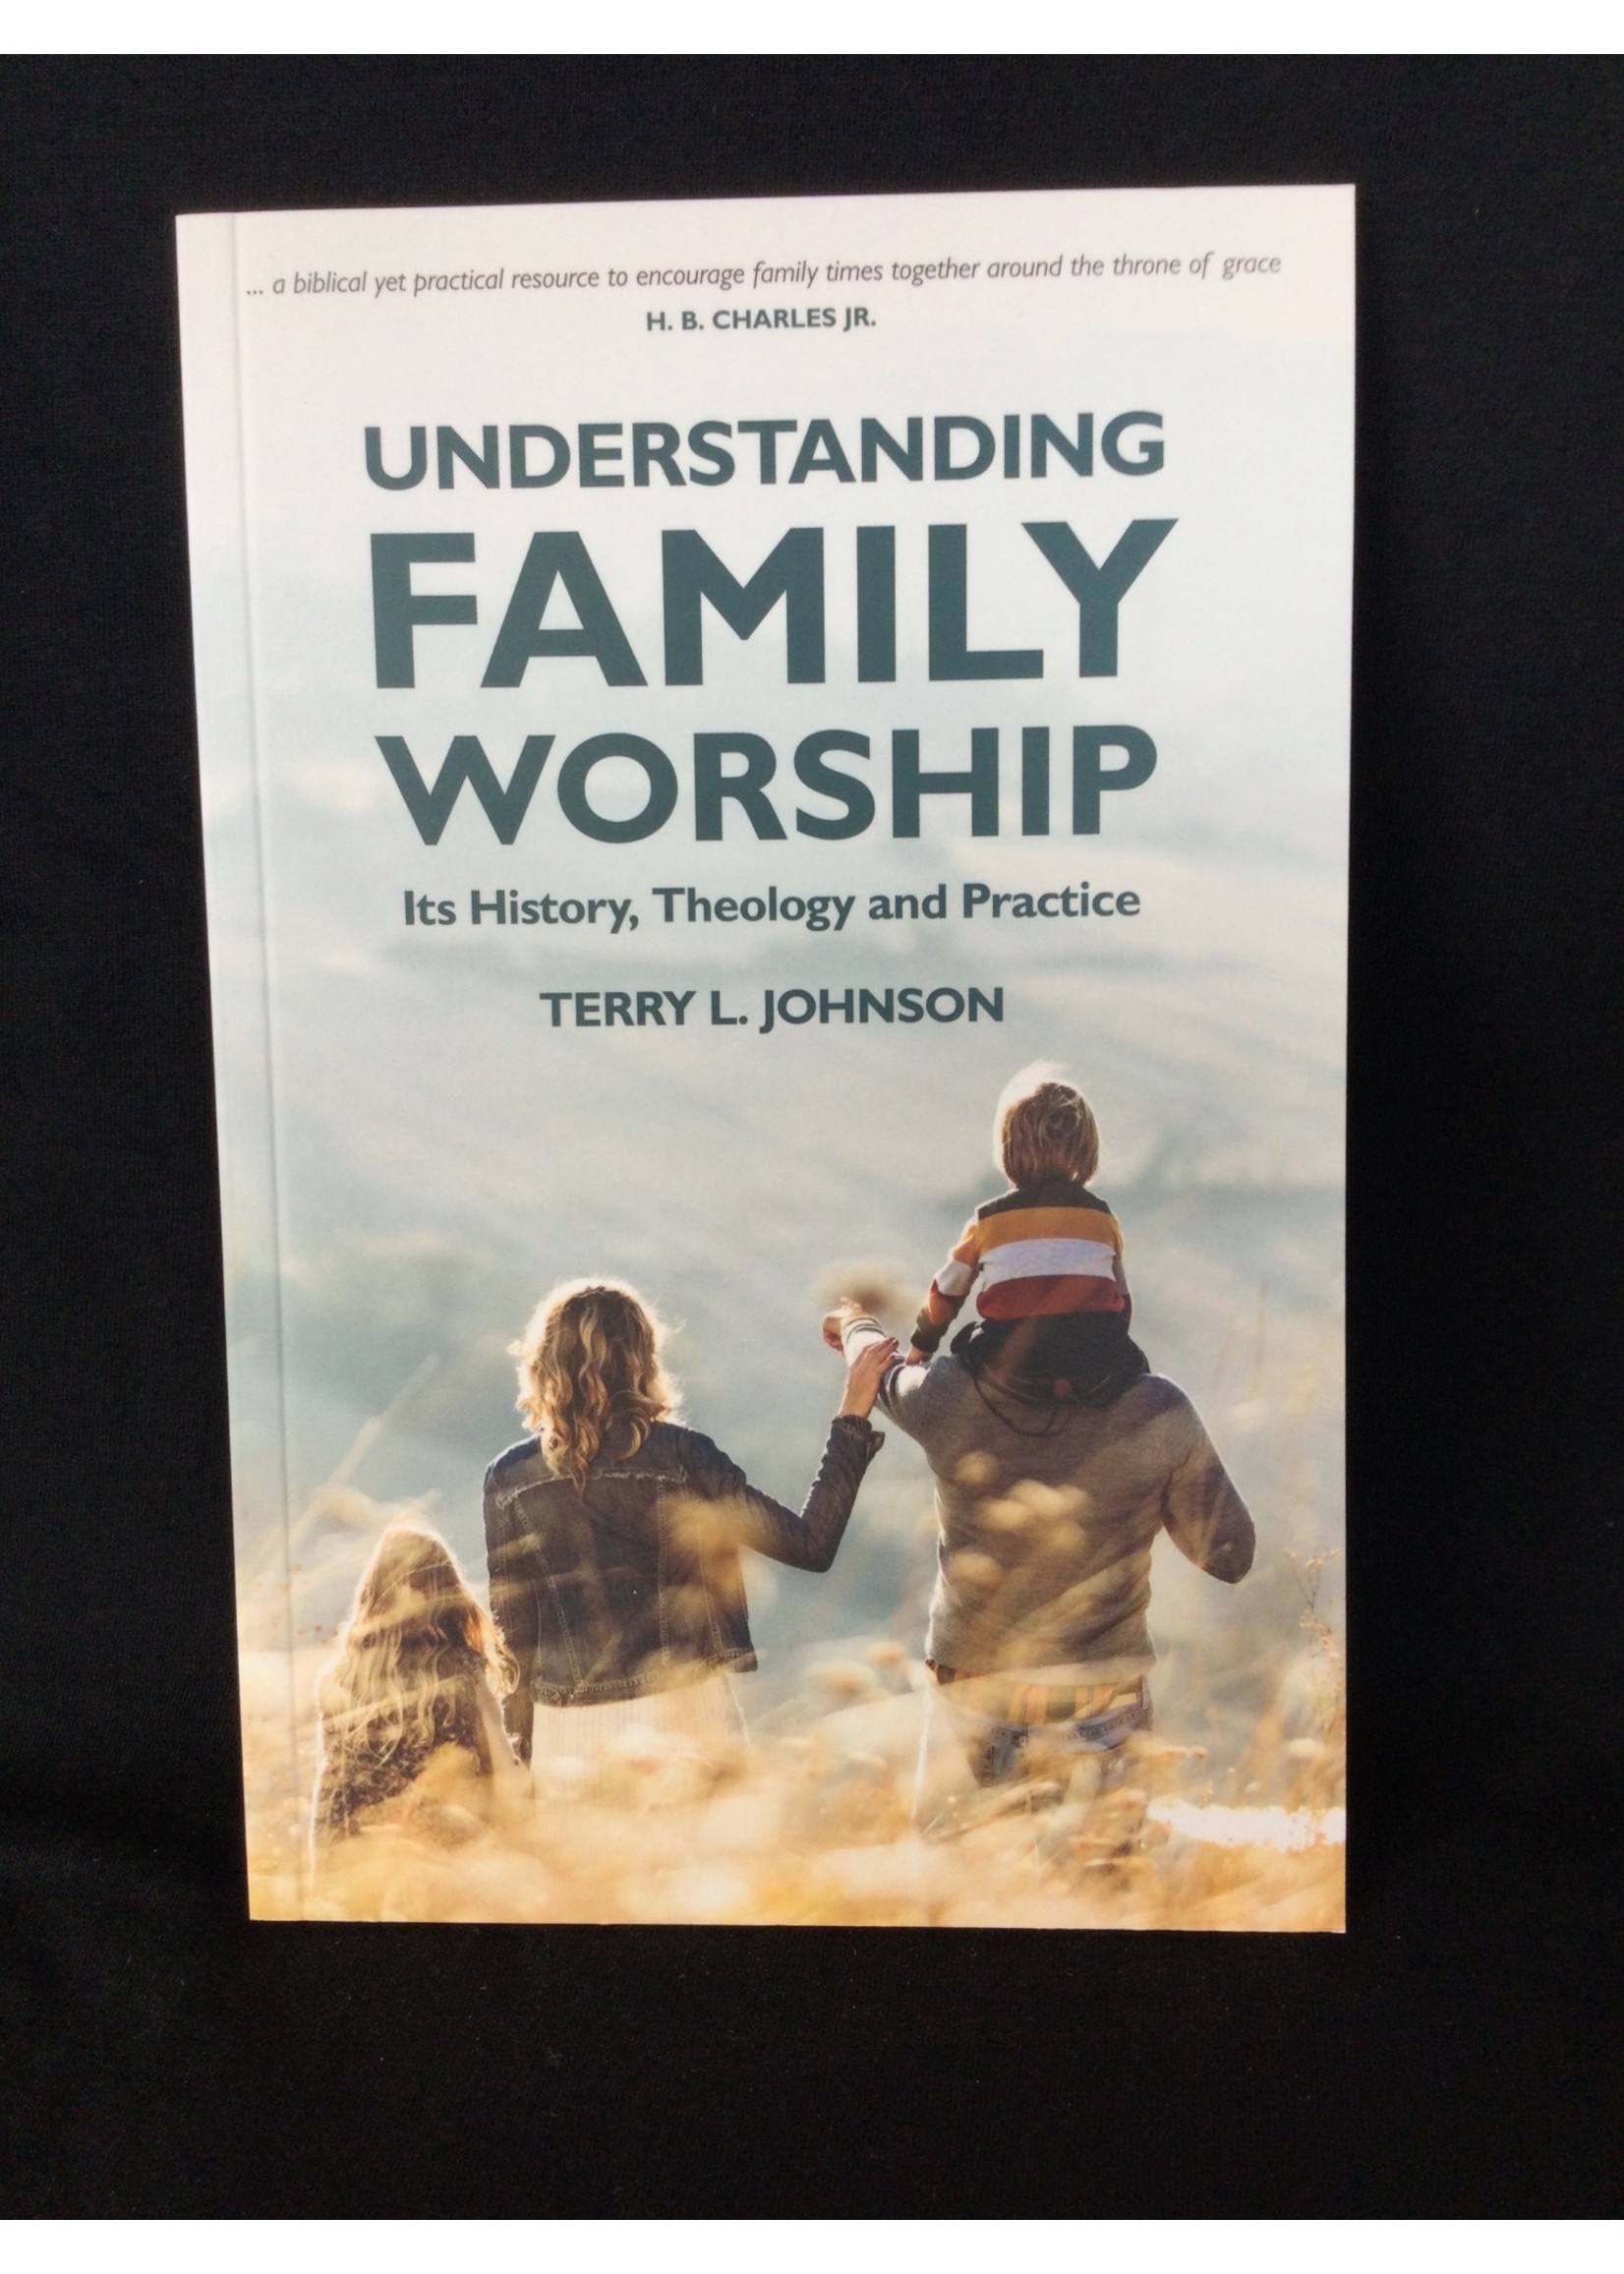 UNDERSTANDING FAMILY WORSHIP